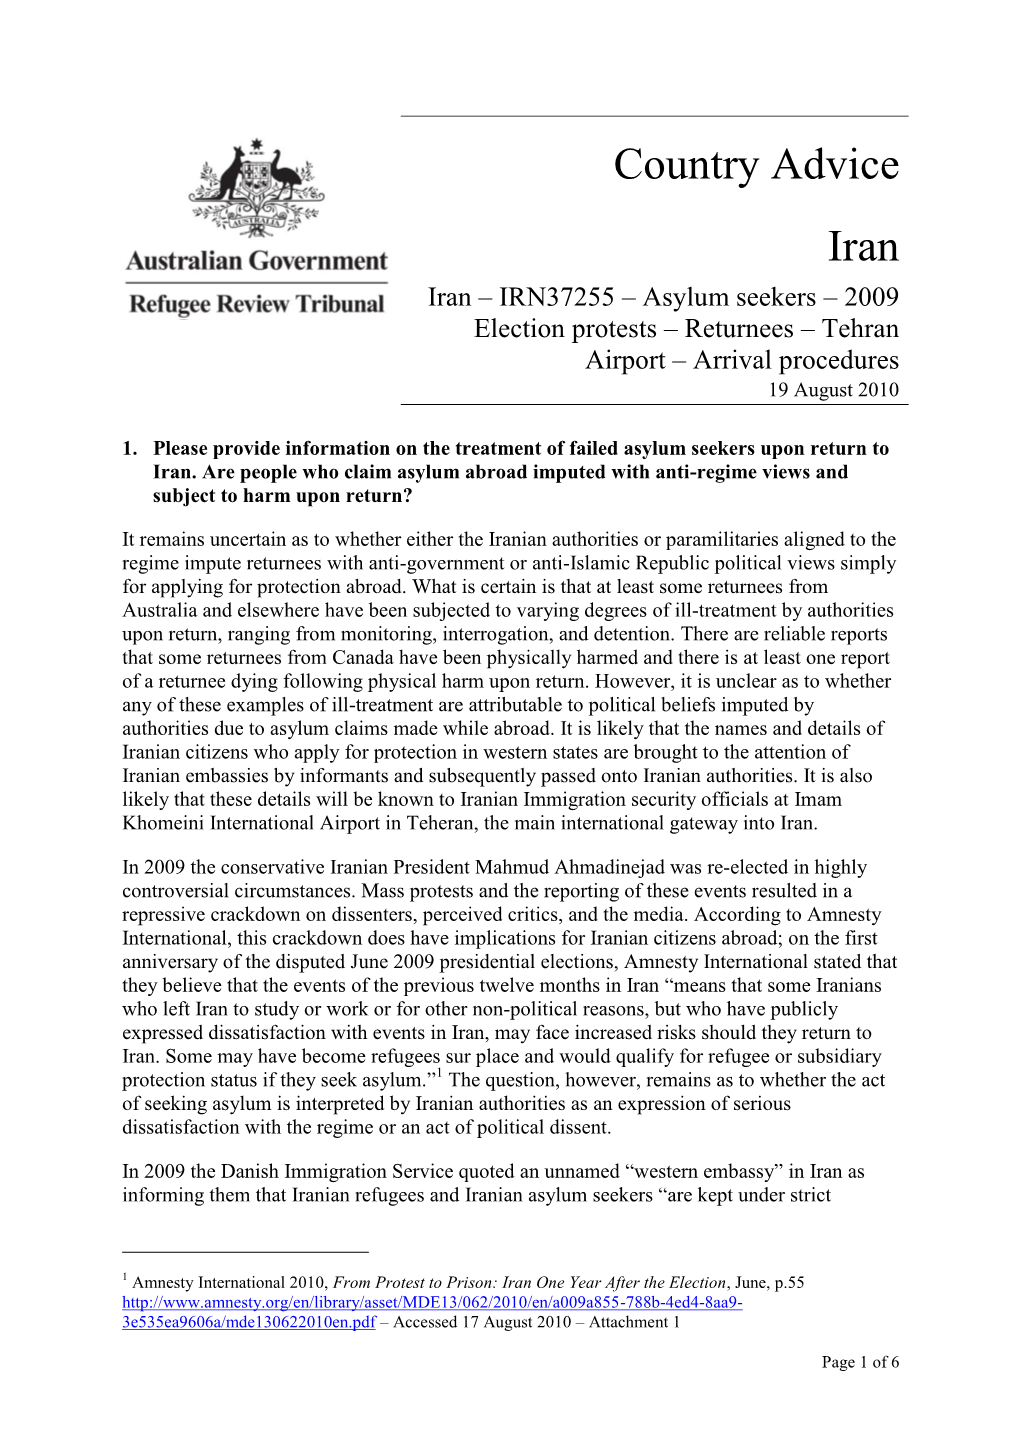 Country Advice Iran Iran – IRN37255 – Asylum Seekers – 2009